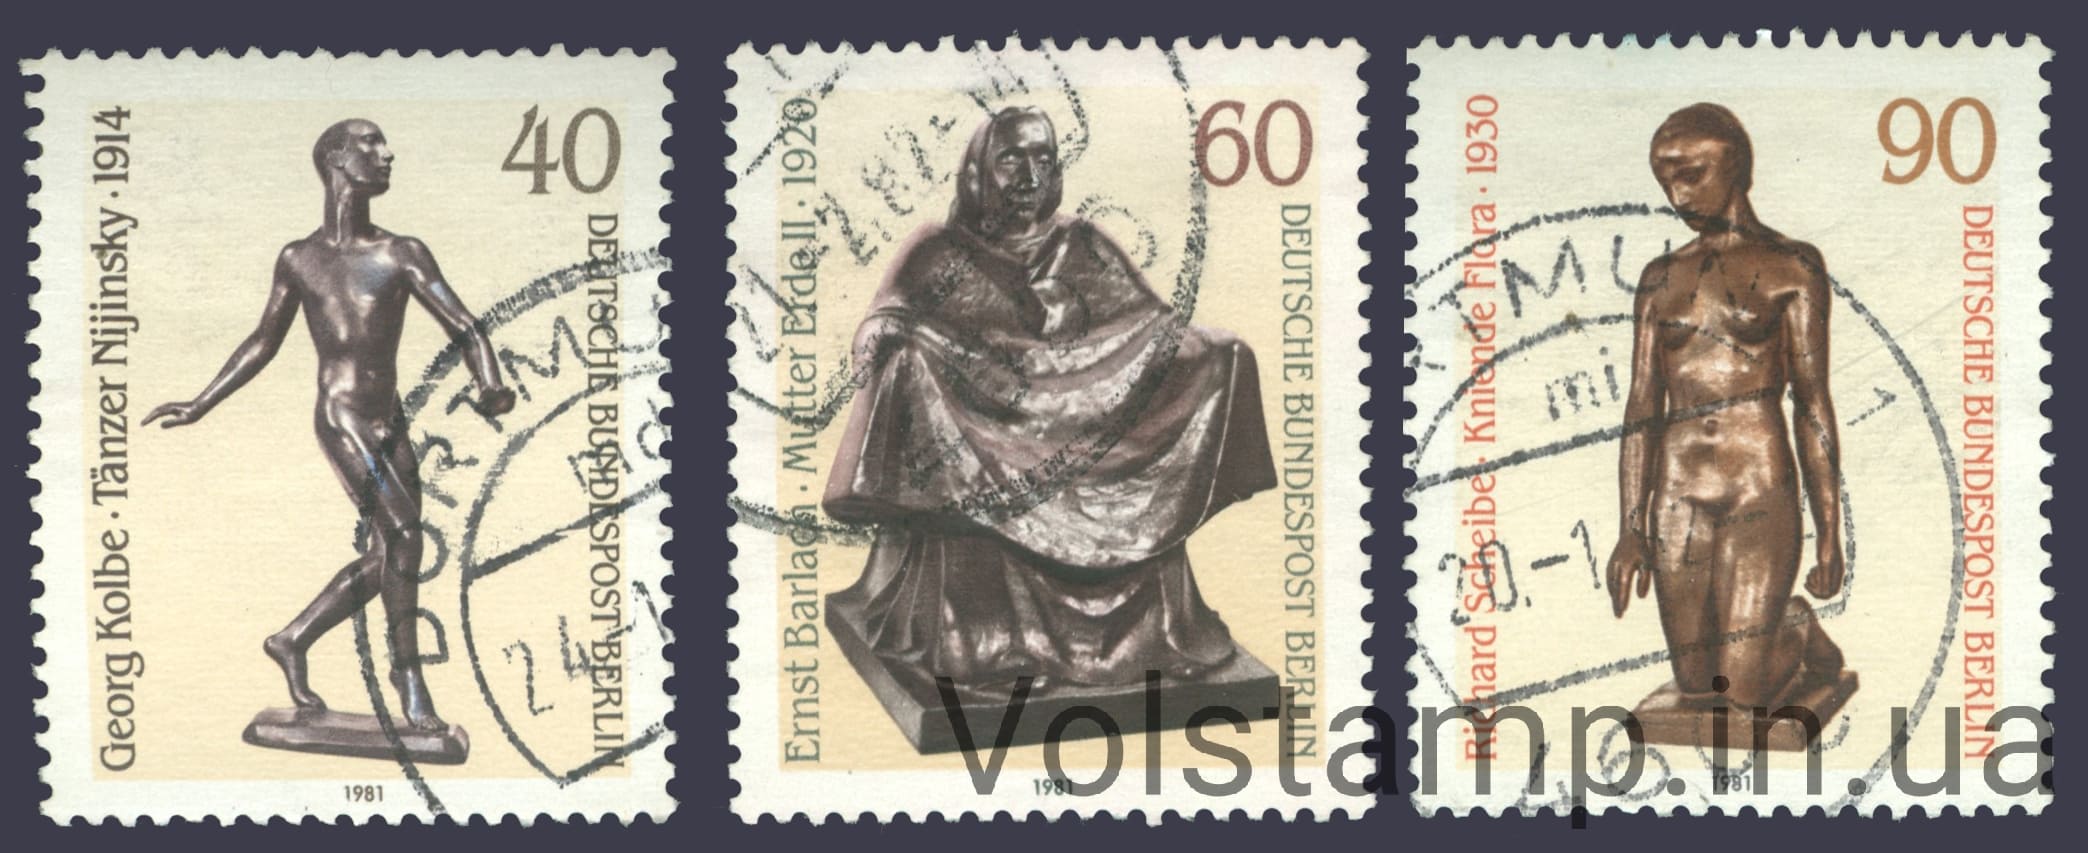 1981 Germany Berlin (West) series of stamps (art, sculptures) Used №655-657